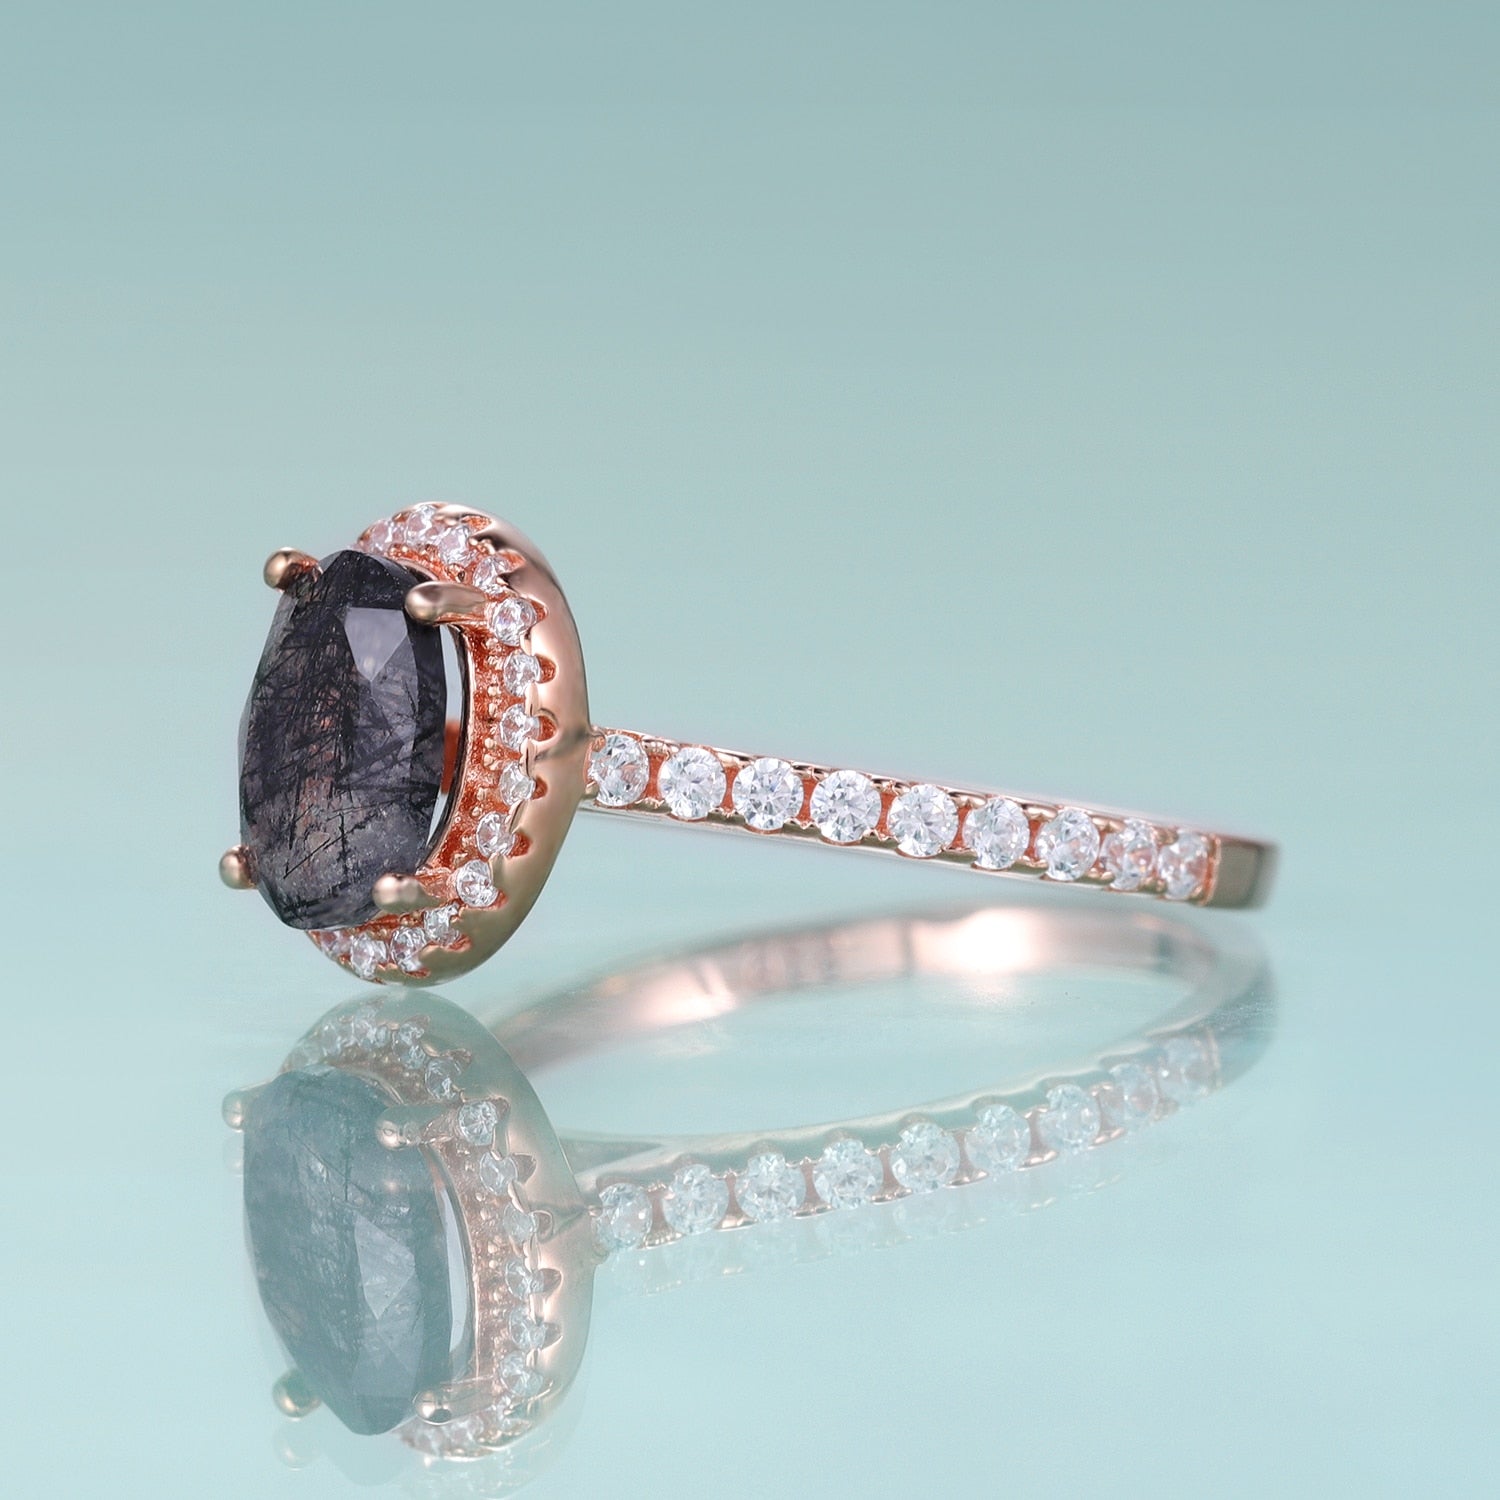 GEM'S BALLET 6X8mm Oval Natural Black Rutilated Quartz Gemstone Wedding Engagement Ring in 925 Sterling Silver Gift For Her